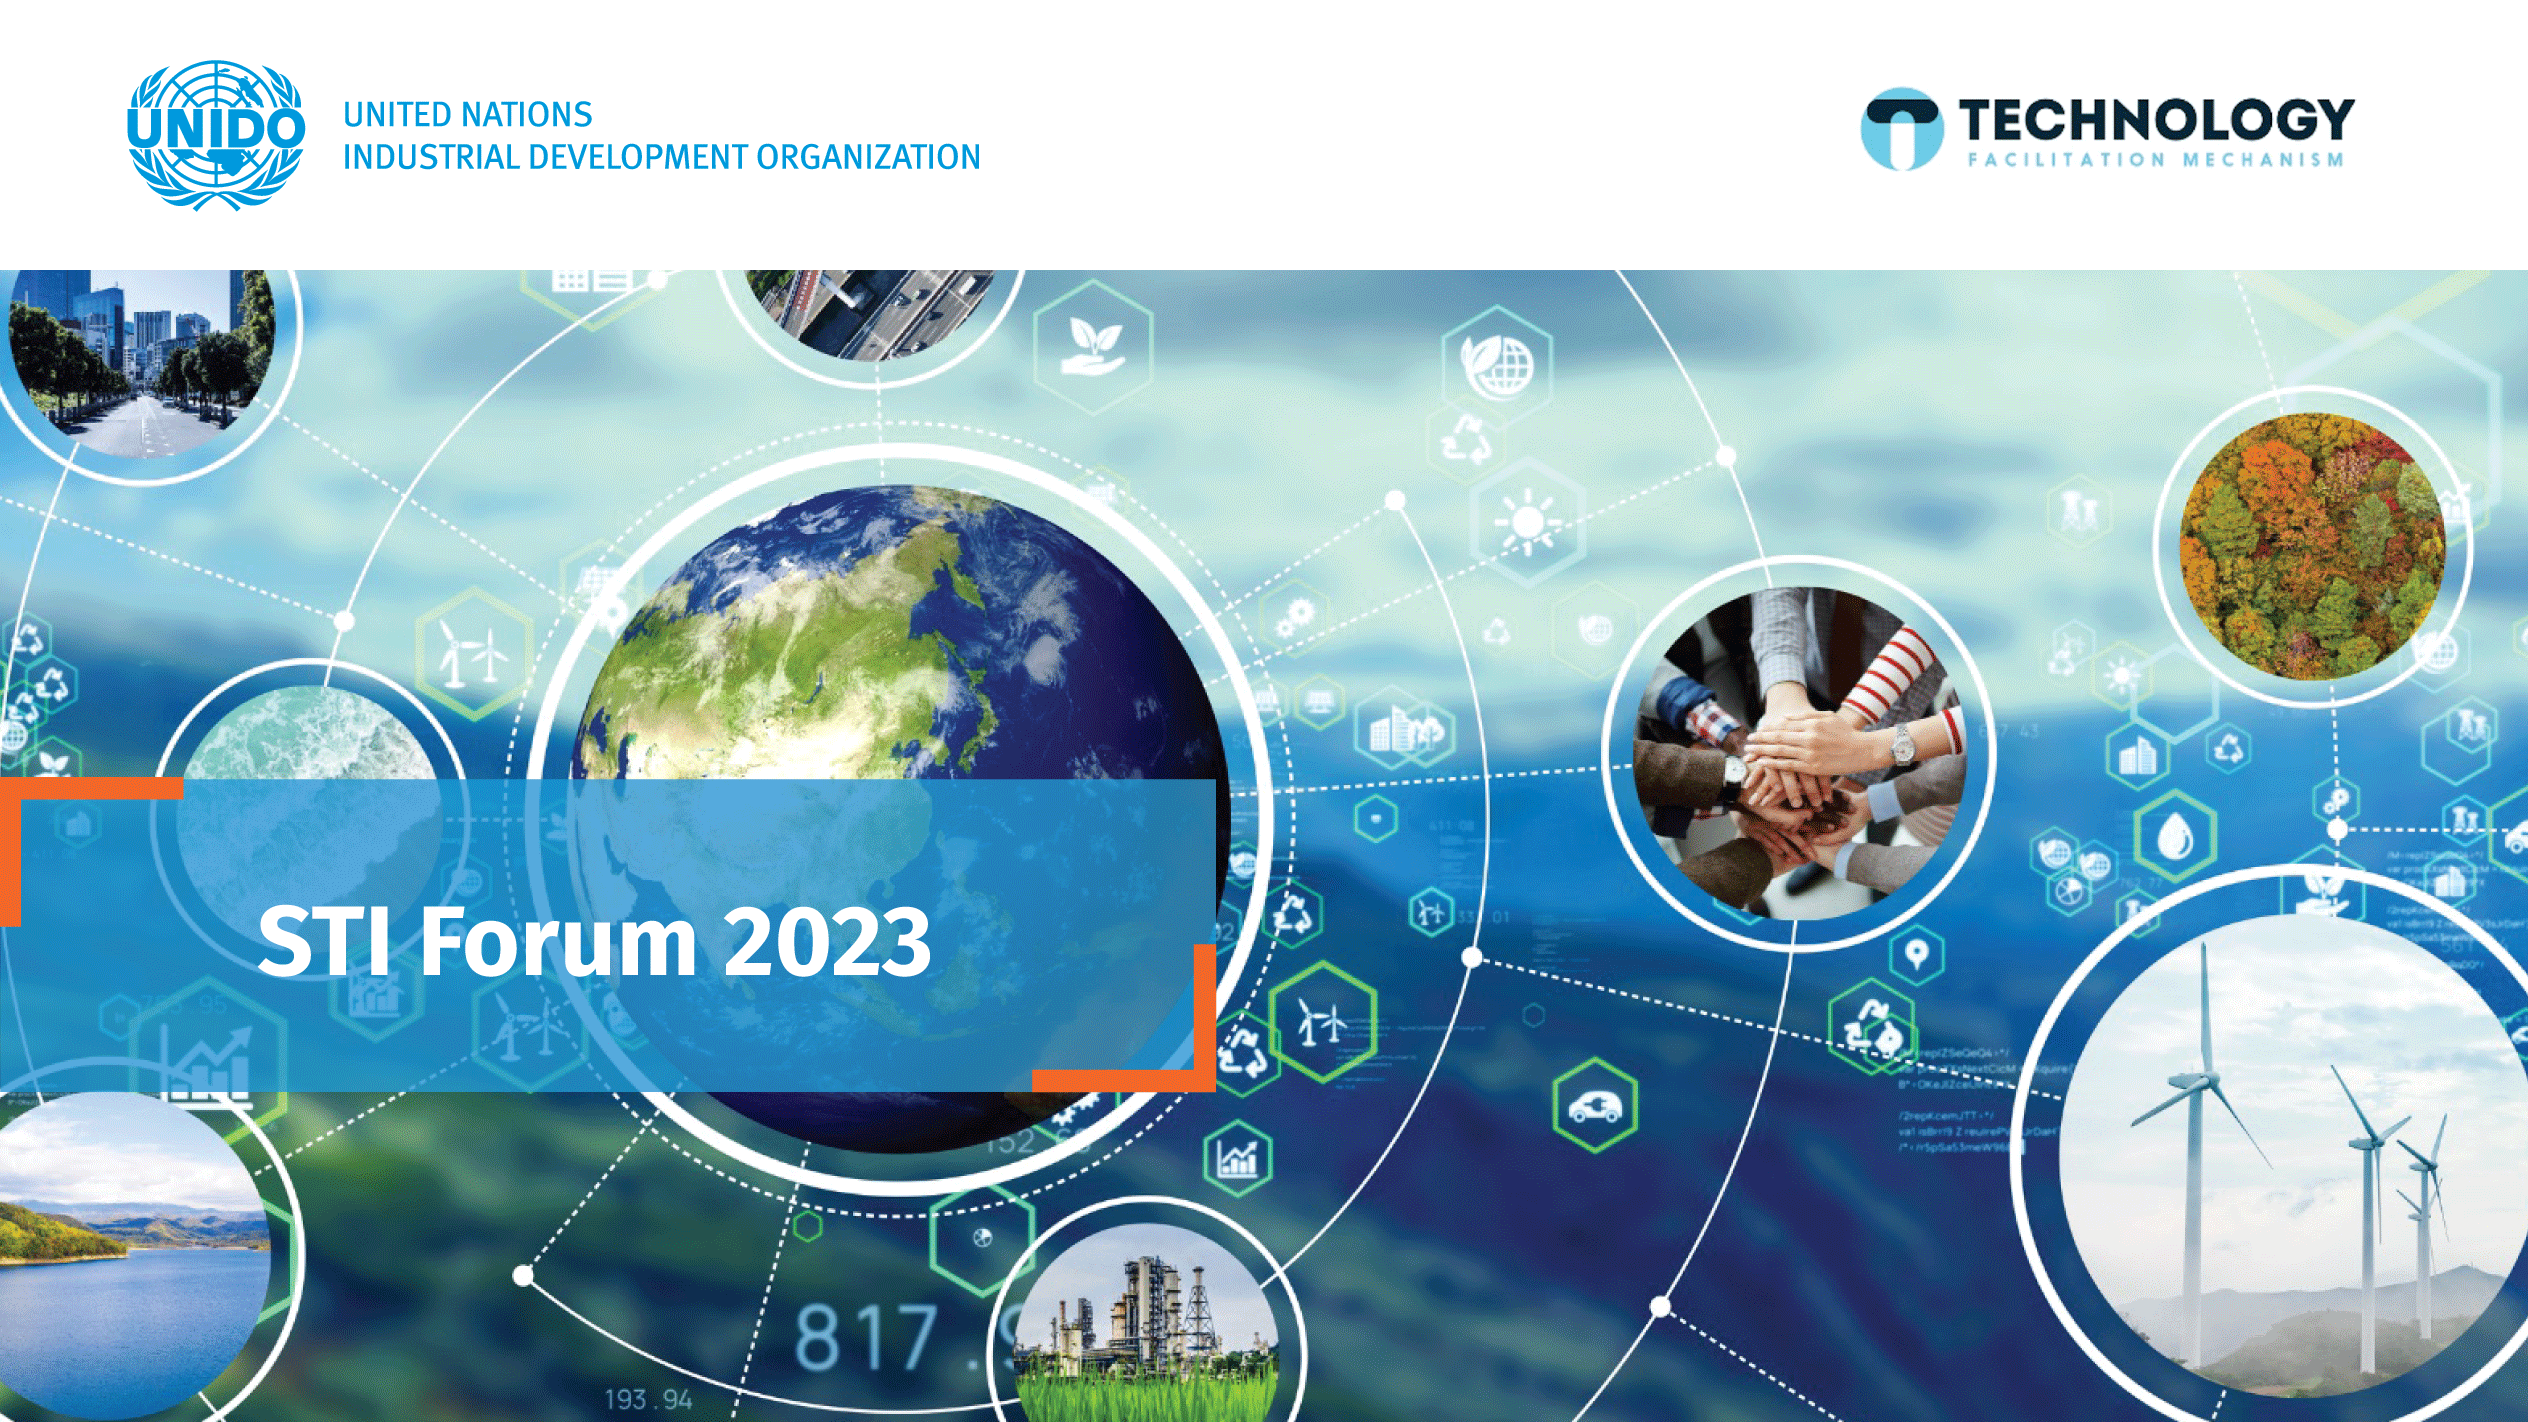 STI Forum 2023 UNIDO